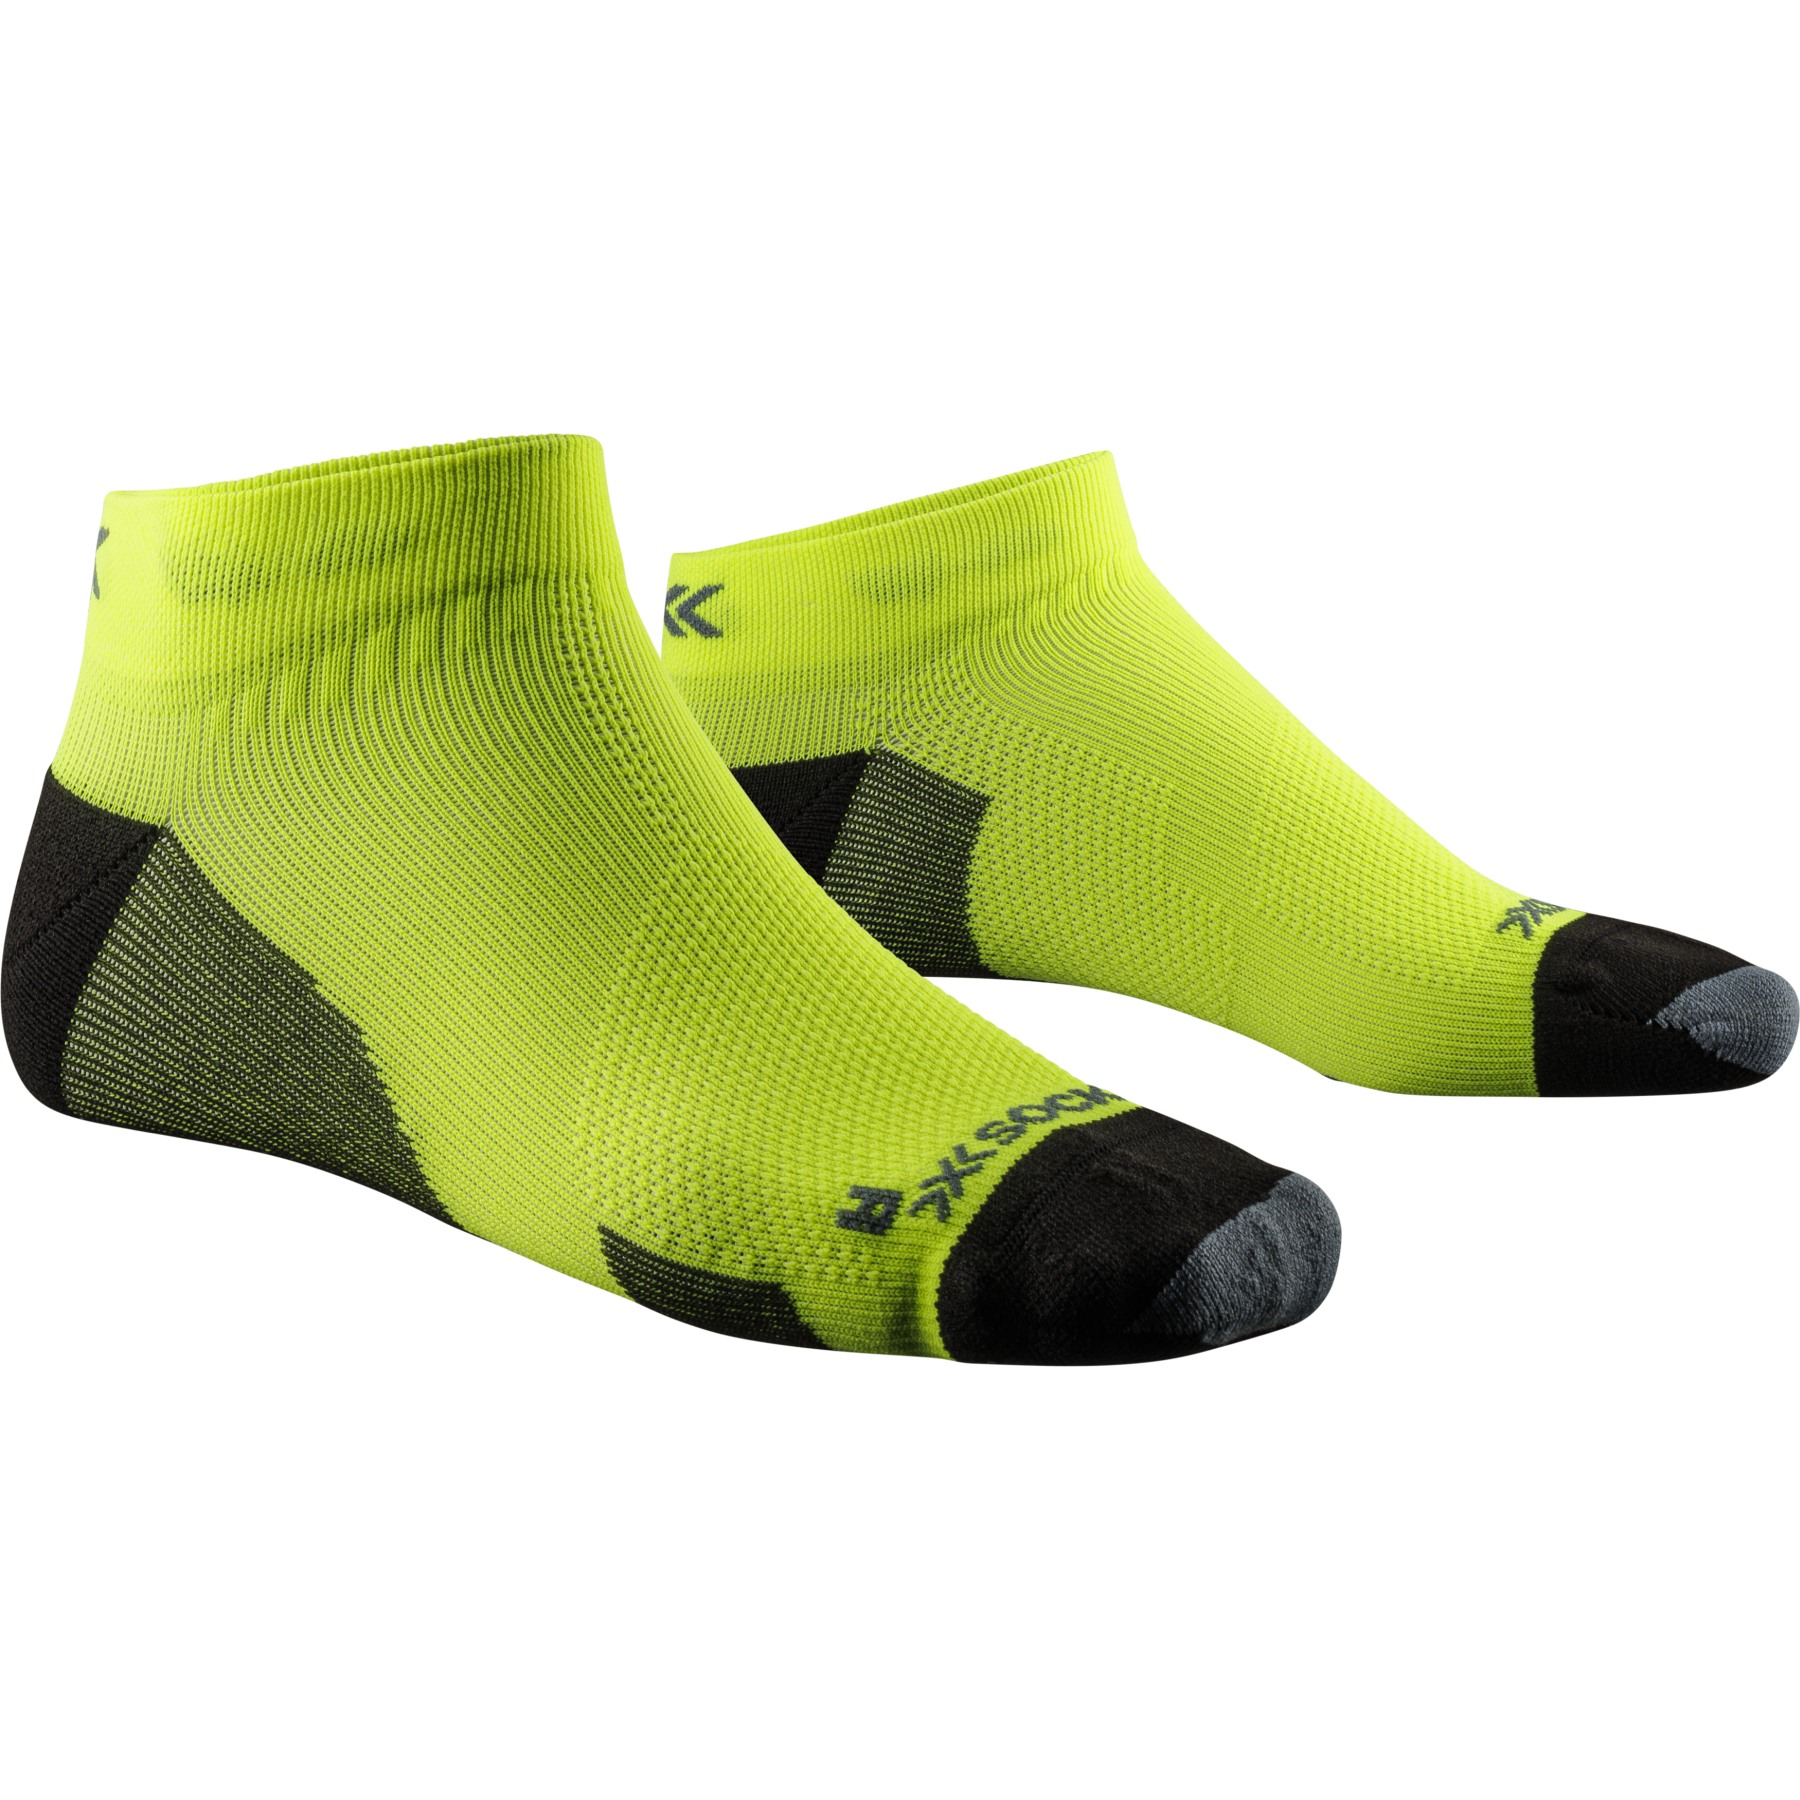 Produktbild von X-Socks Run Discover Low Cut Laufsocken - fluo yellow/opal black